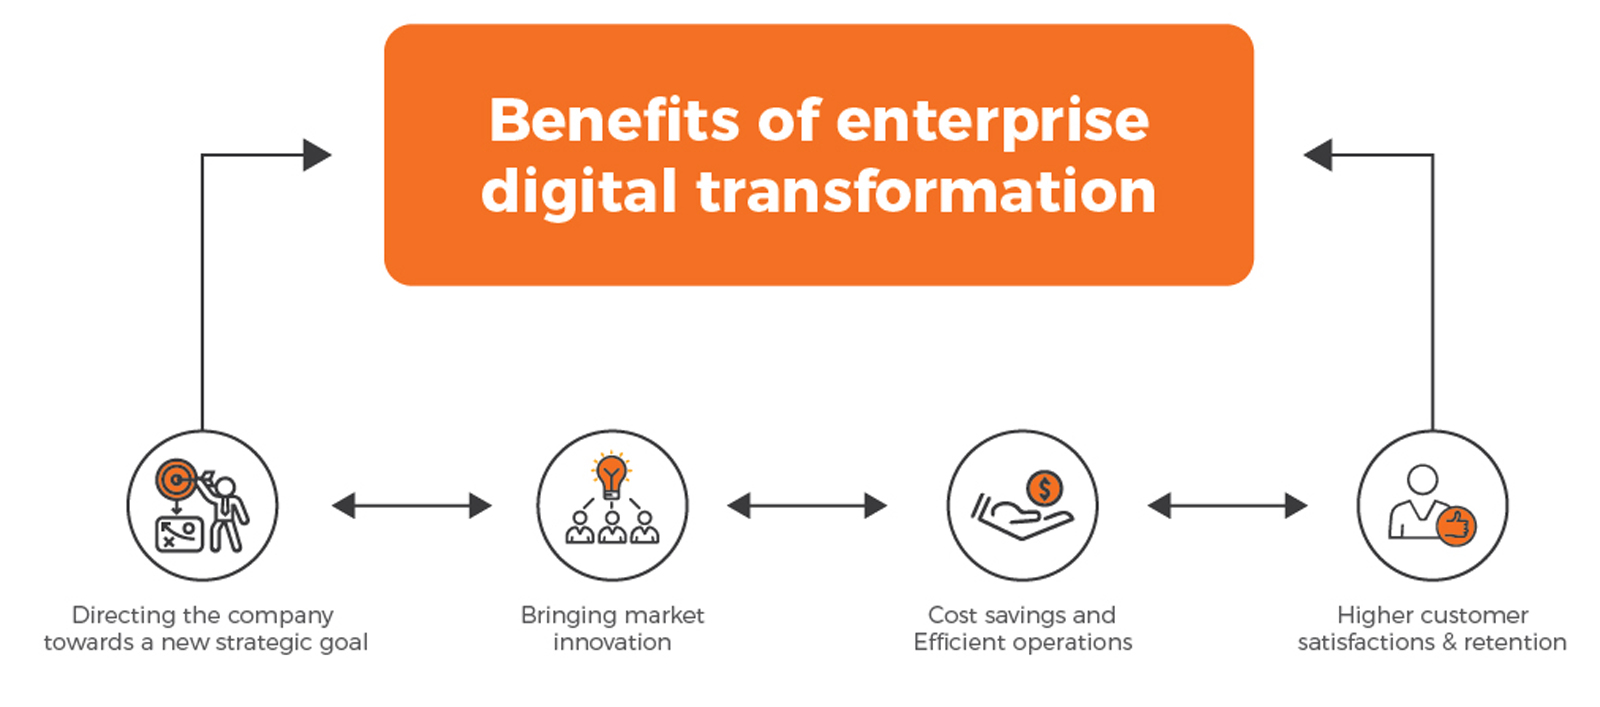 Enterprise Digital Transformation